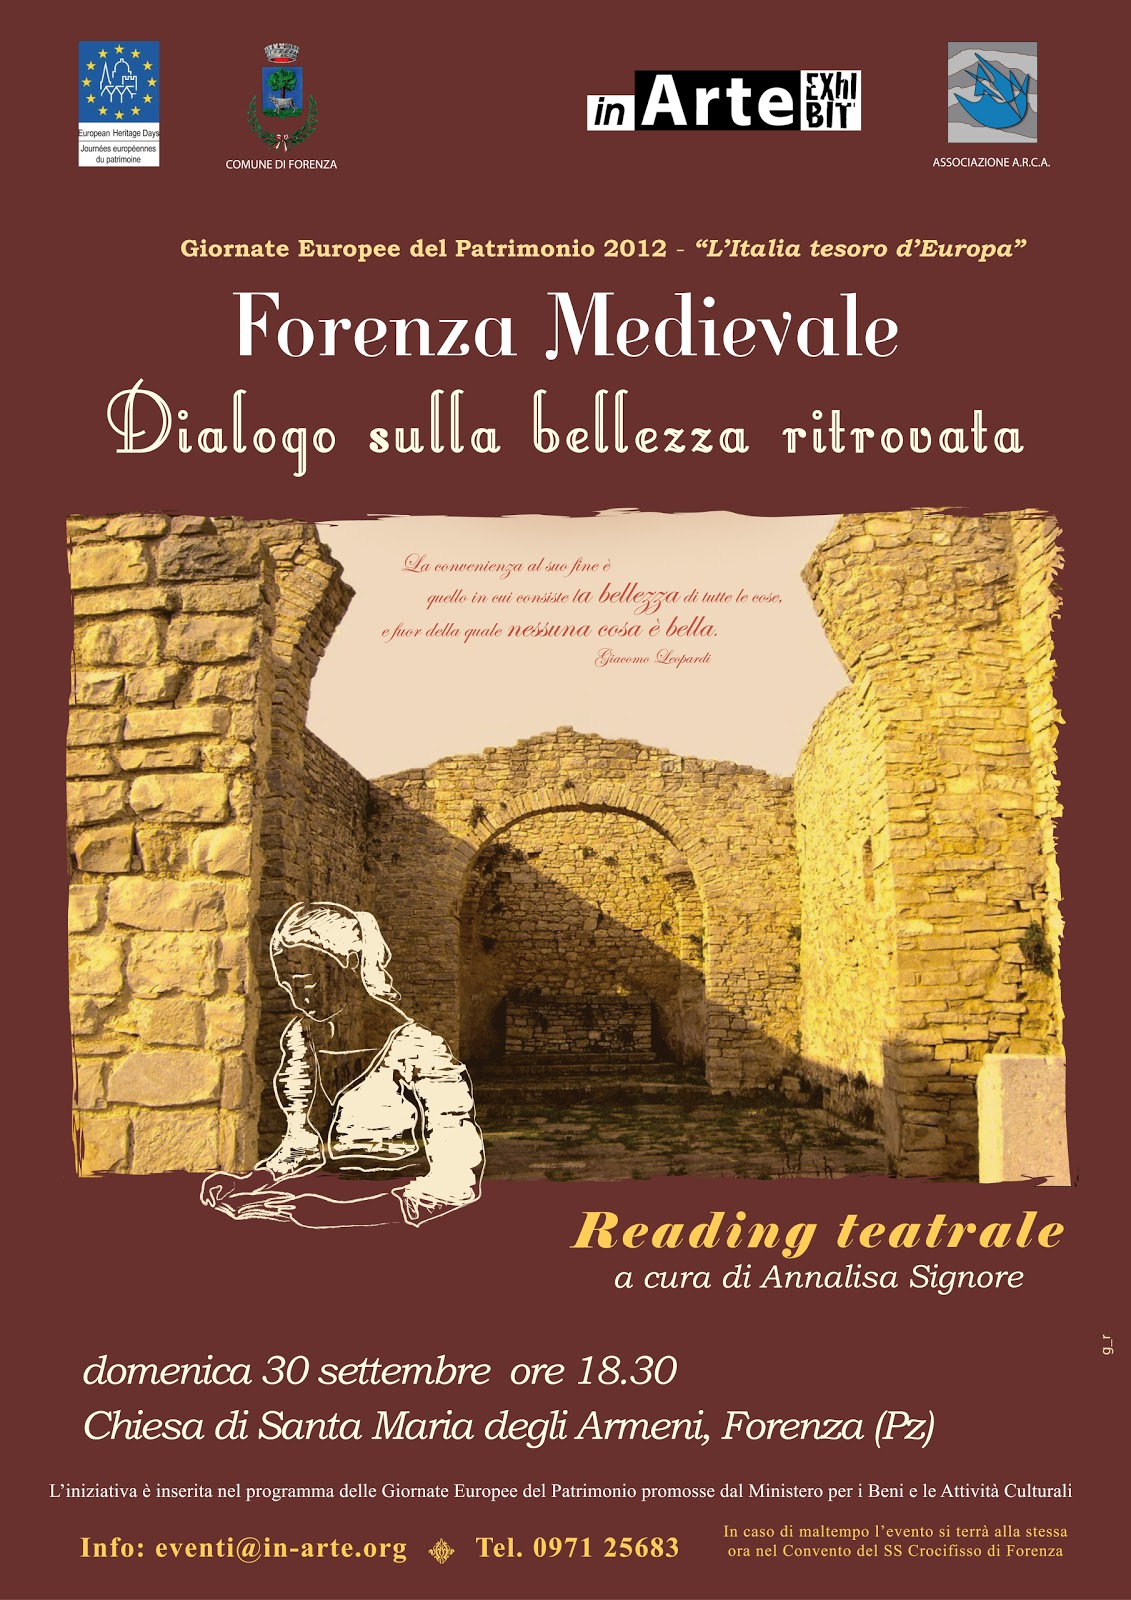 http://inarte-blog.blogspot.it/2012/09/forenza-medievale-dialogo-sulla.html